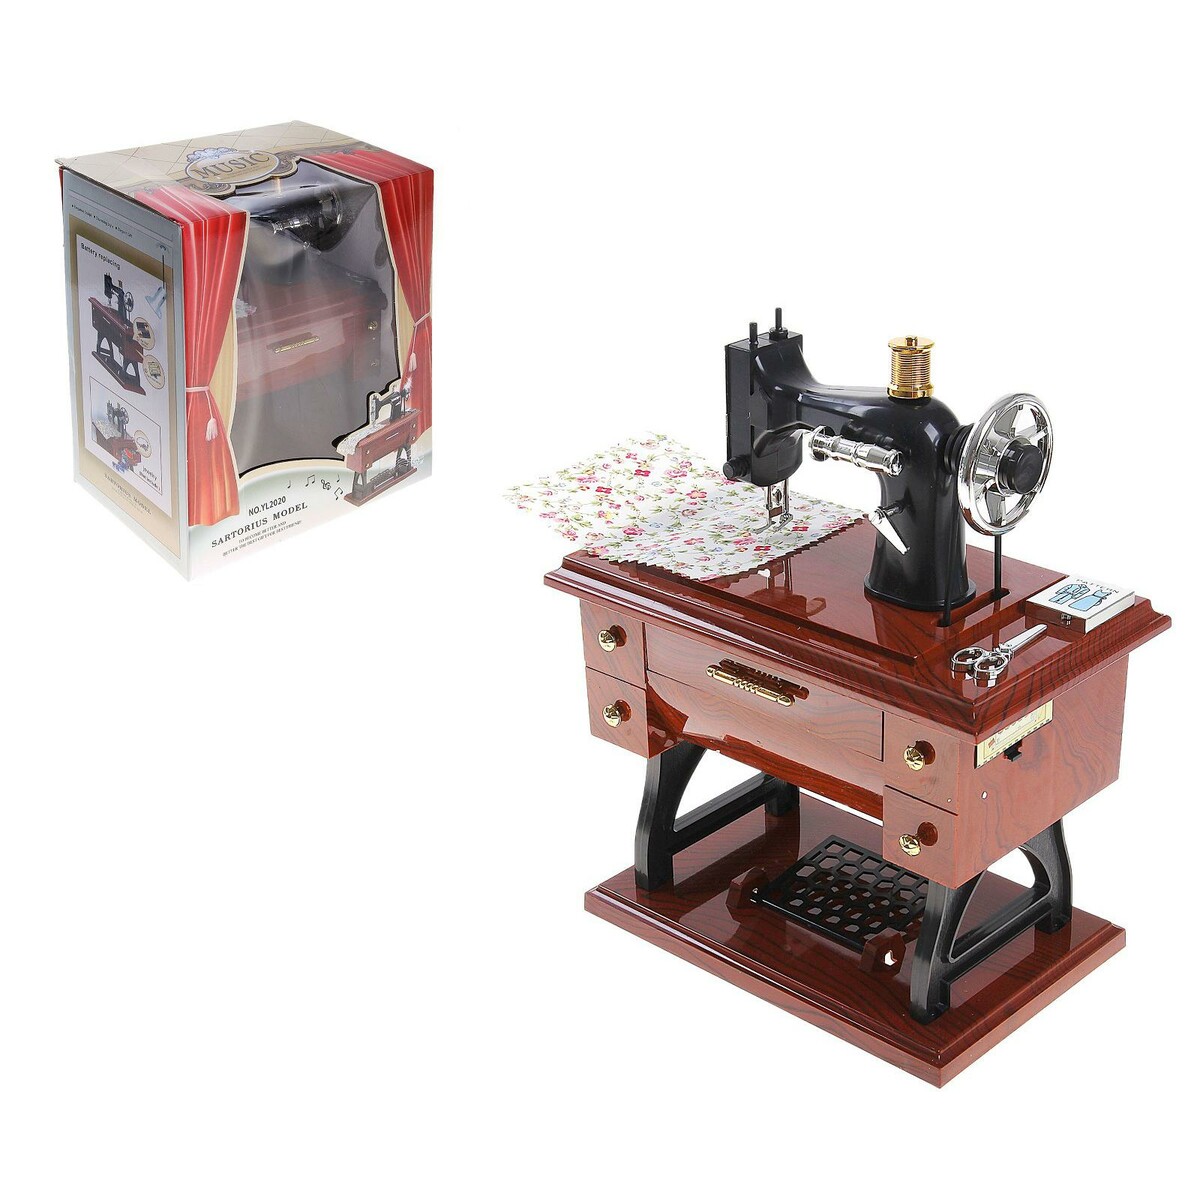 Машинка швейная шкатулка закаточная машинка